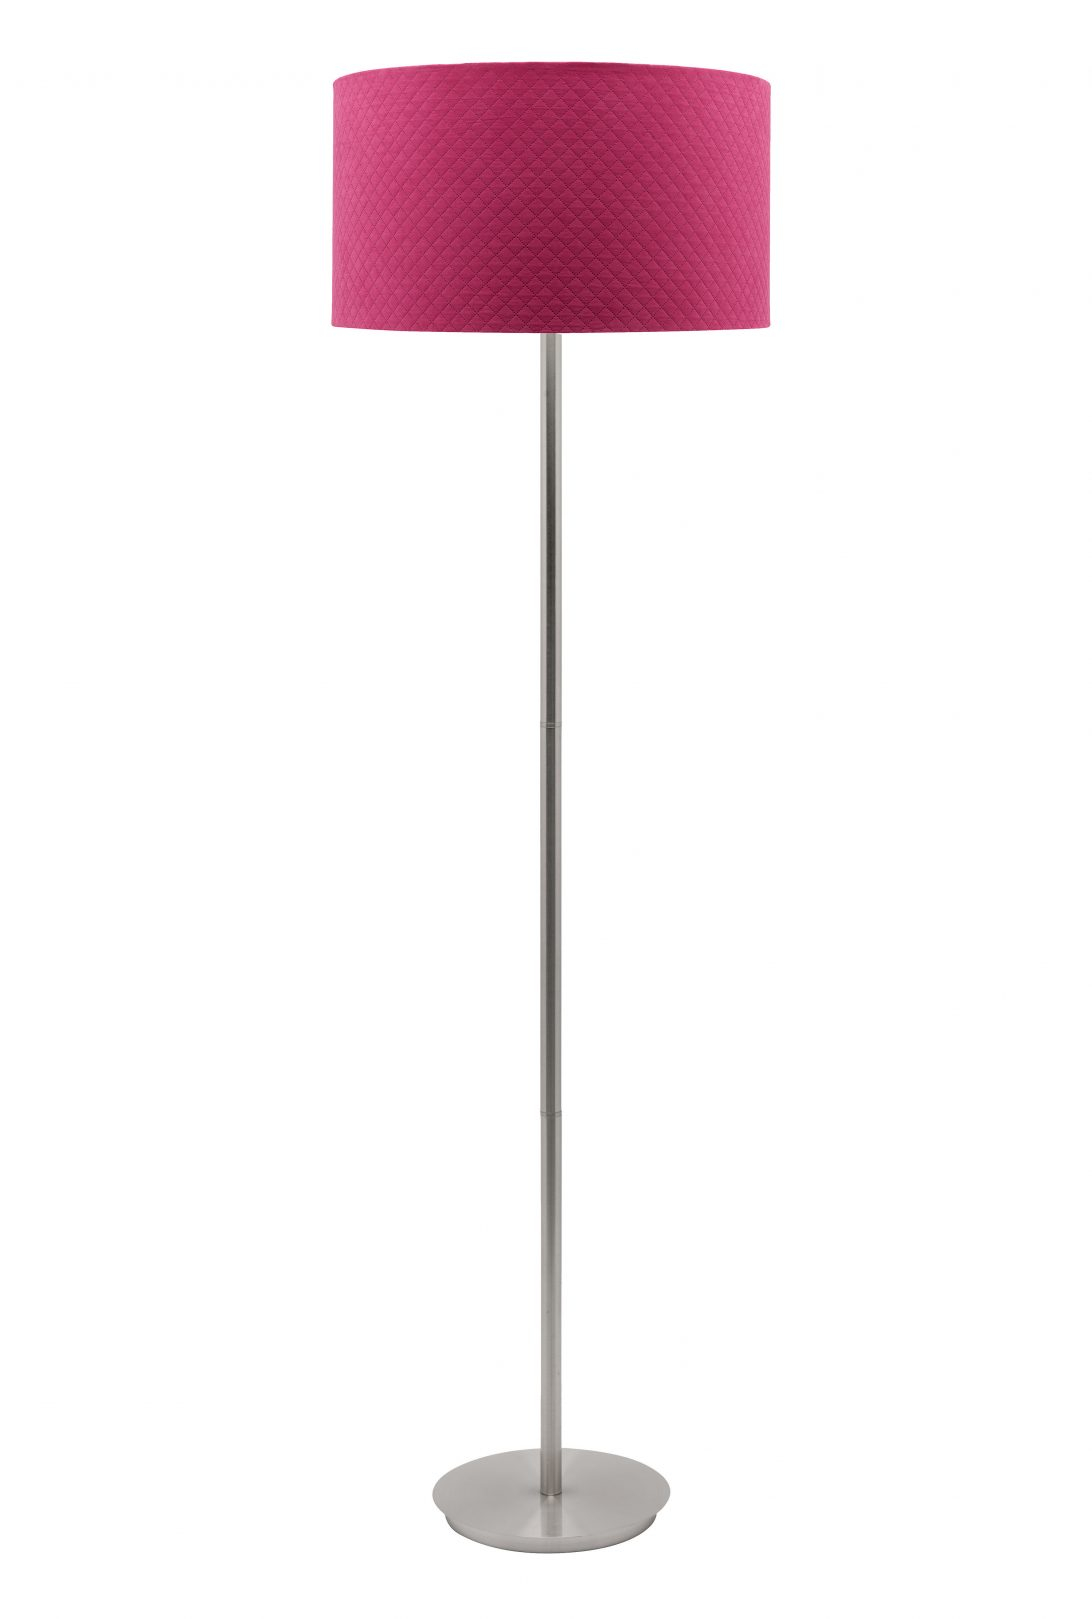 Target Room Essentials Floor Lamp Kids Blush Pink Lamps regarding size 1092 X 1619